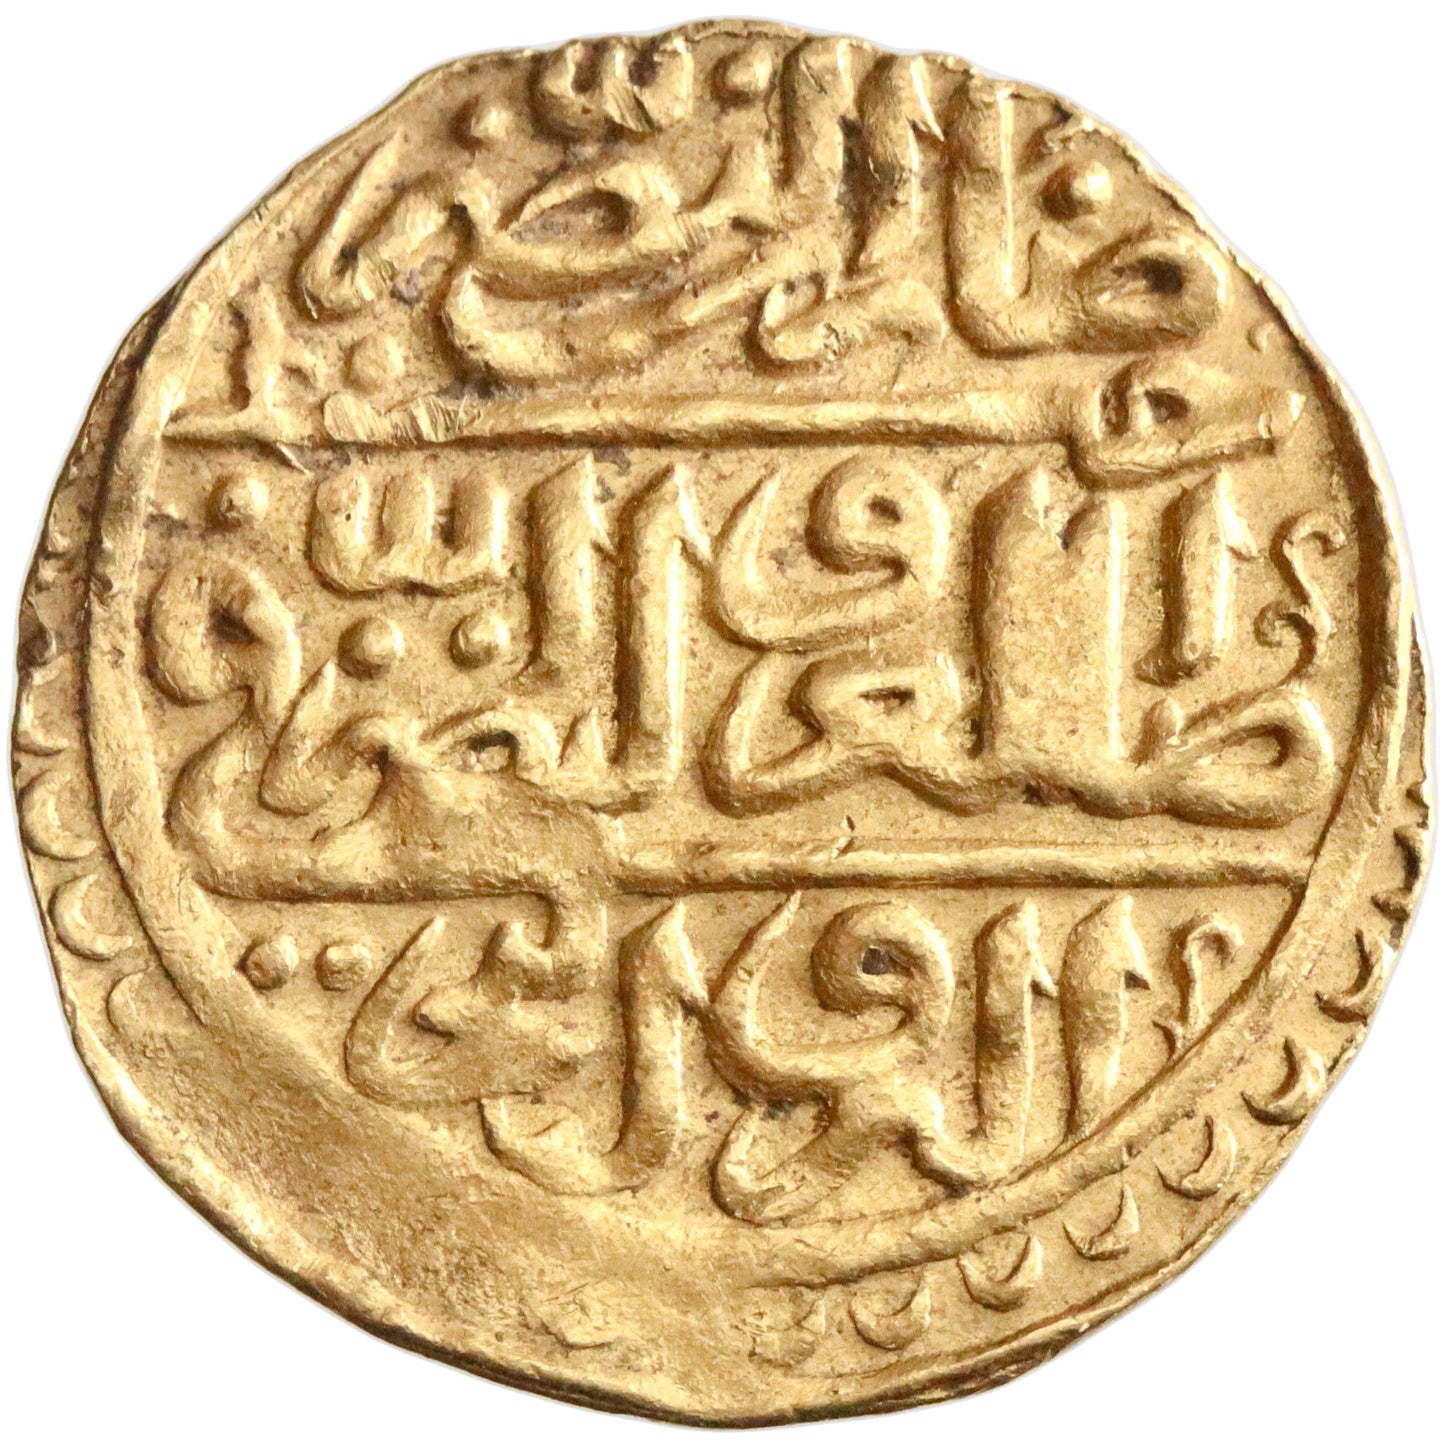 Ottoman, Murad III, gold sultani, Misr (Egypt) mint, AH 982